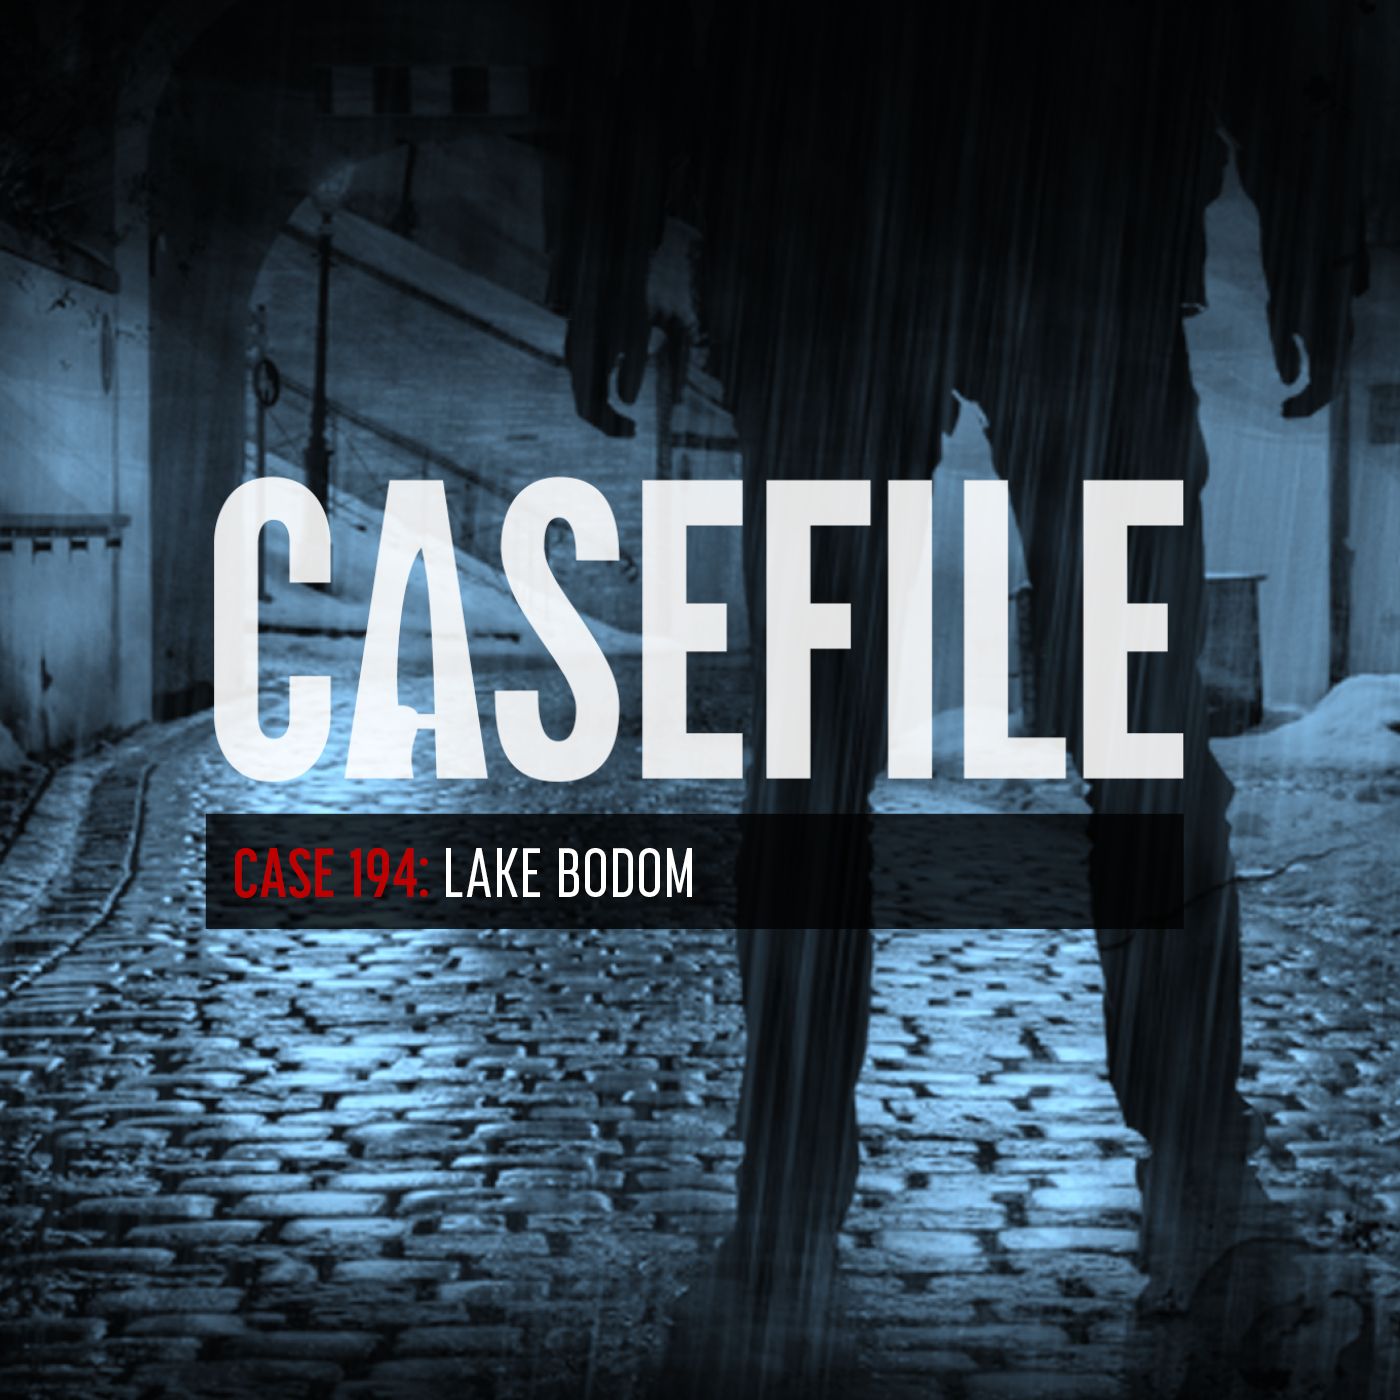 Case 194: Lake Bodom